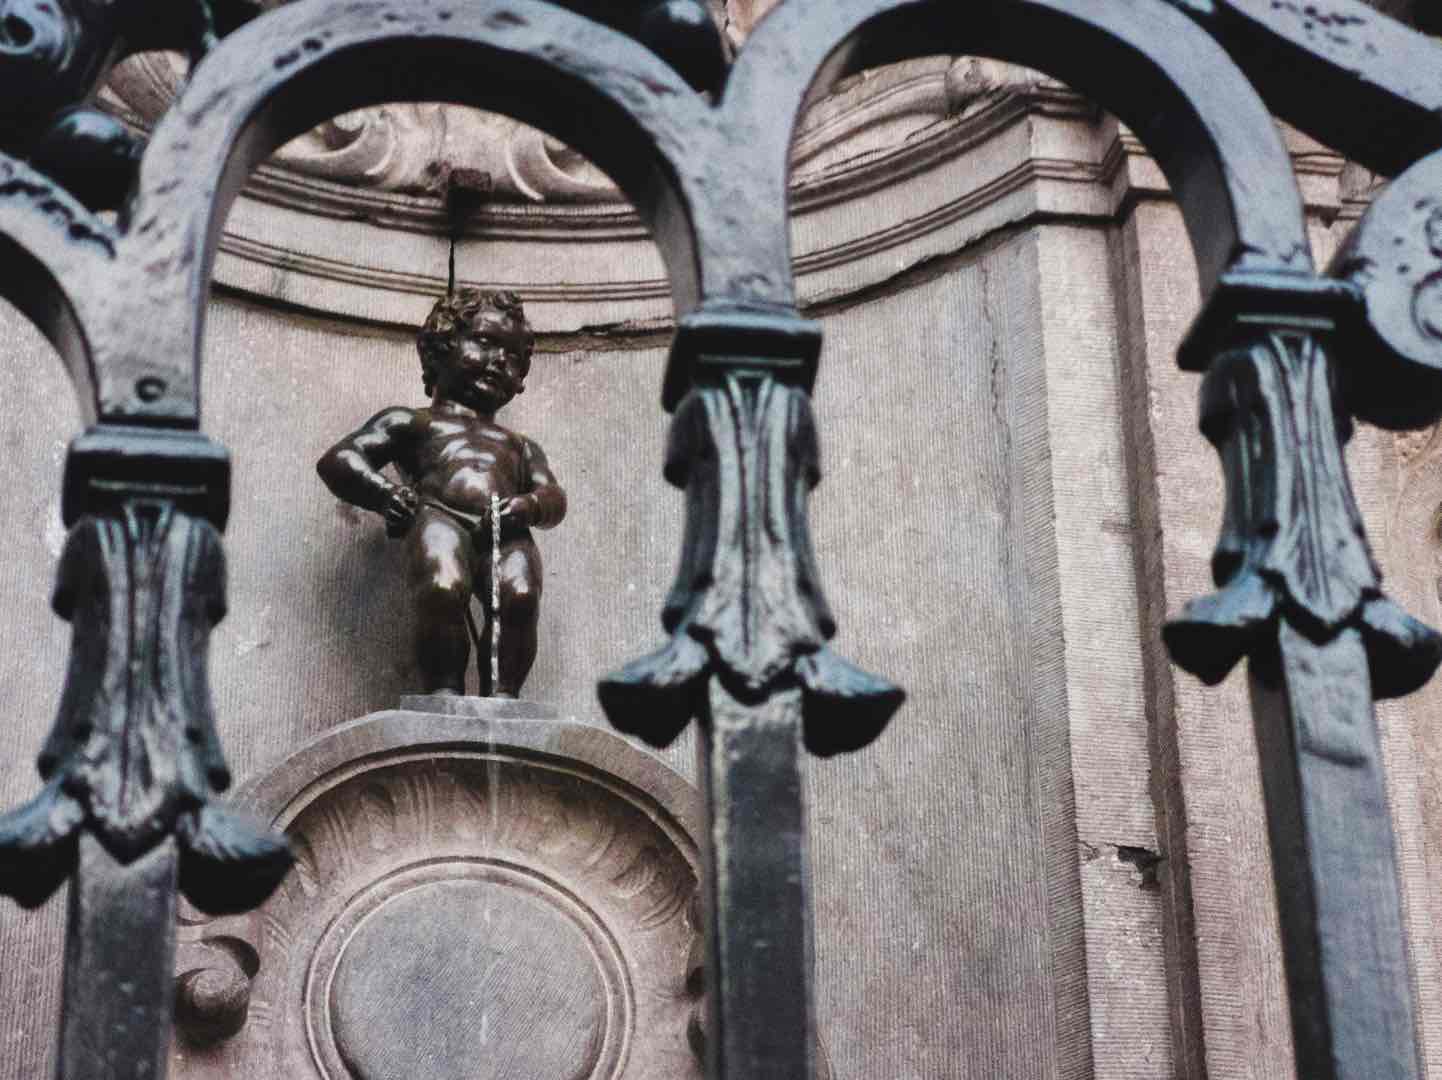 Manneken Pis, Brussels' beloved statue